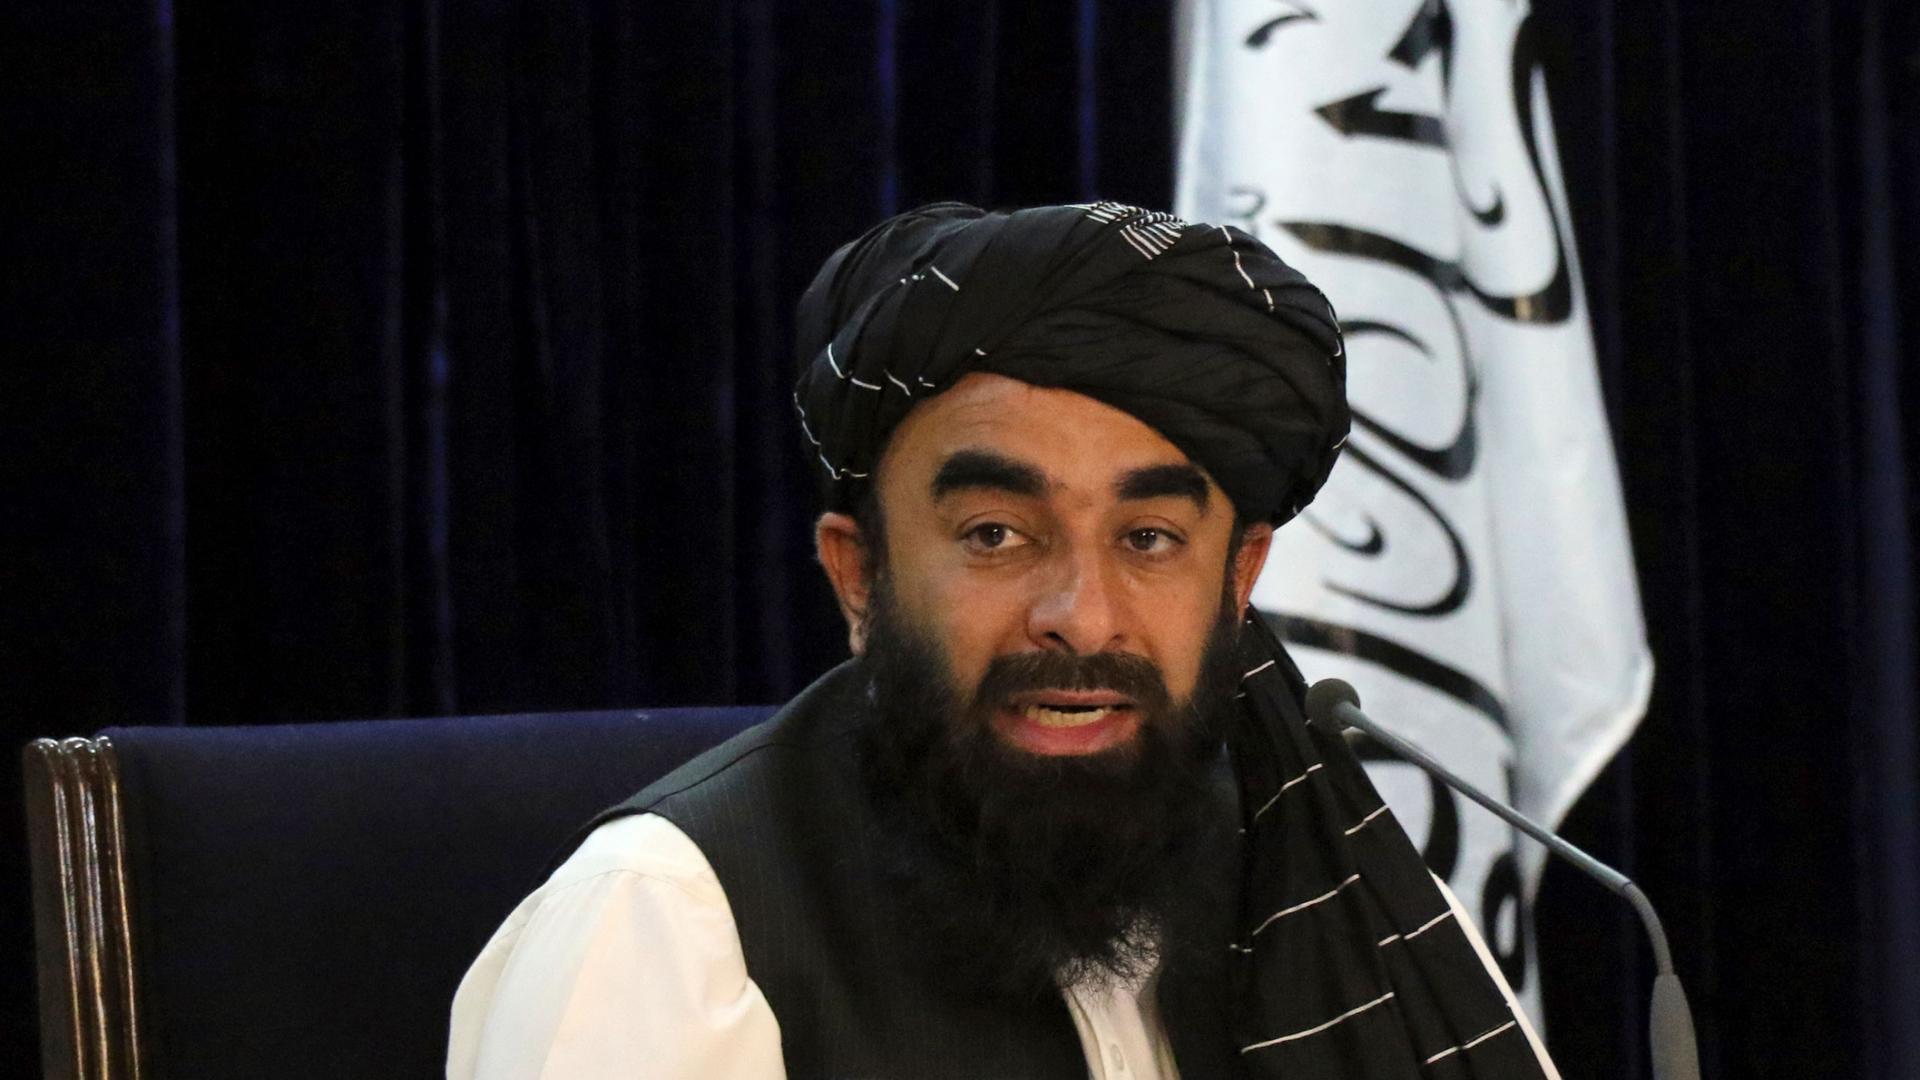 Taliban spokesman Zabihullah Mujahid is shown sitting while wearing a dark head wrap and black vest with the Taliban flag behind him.